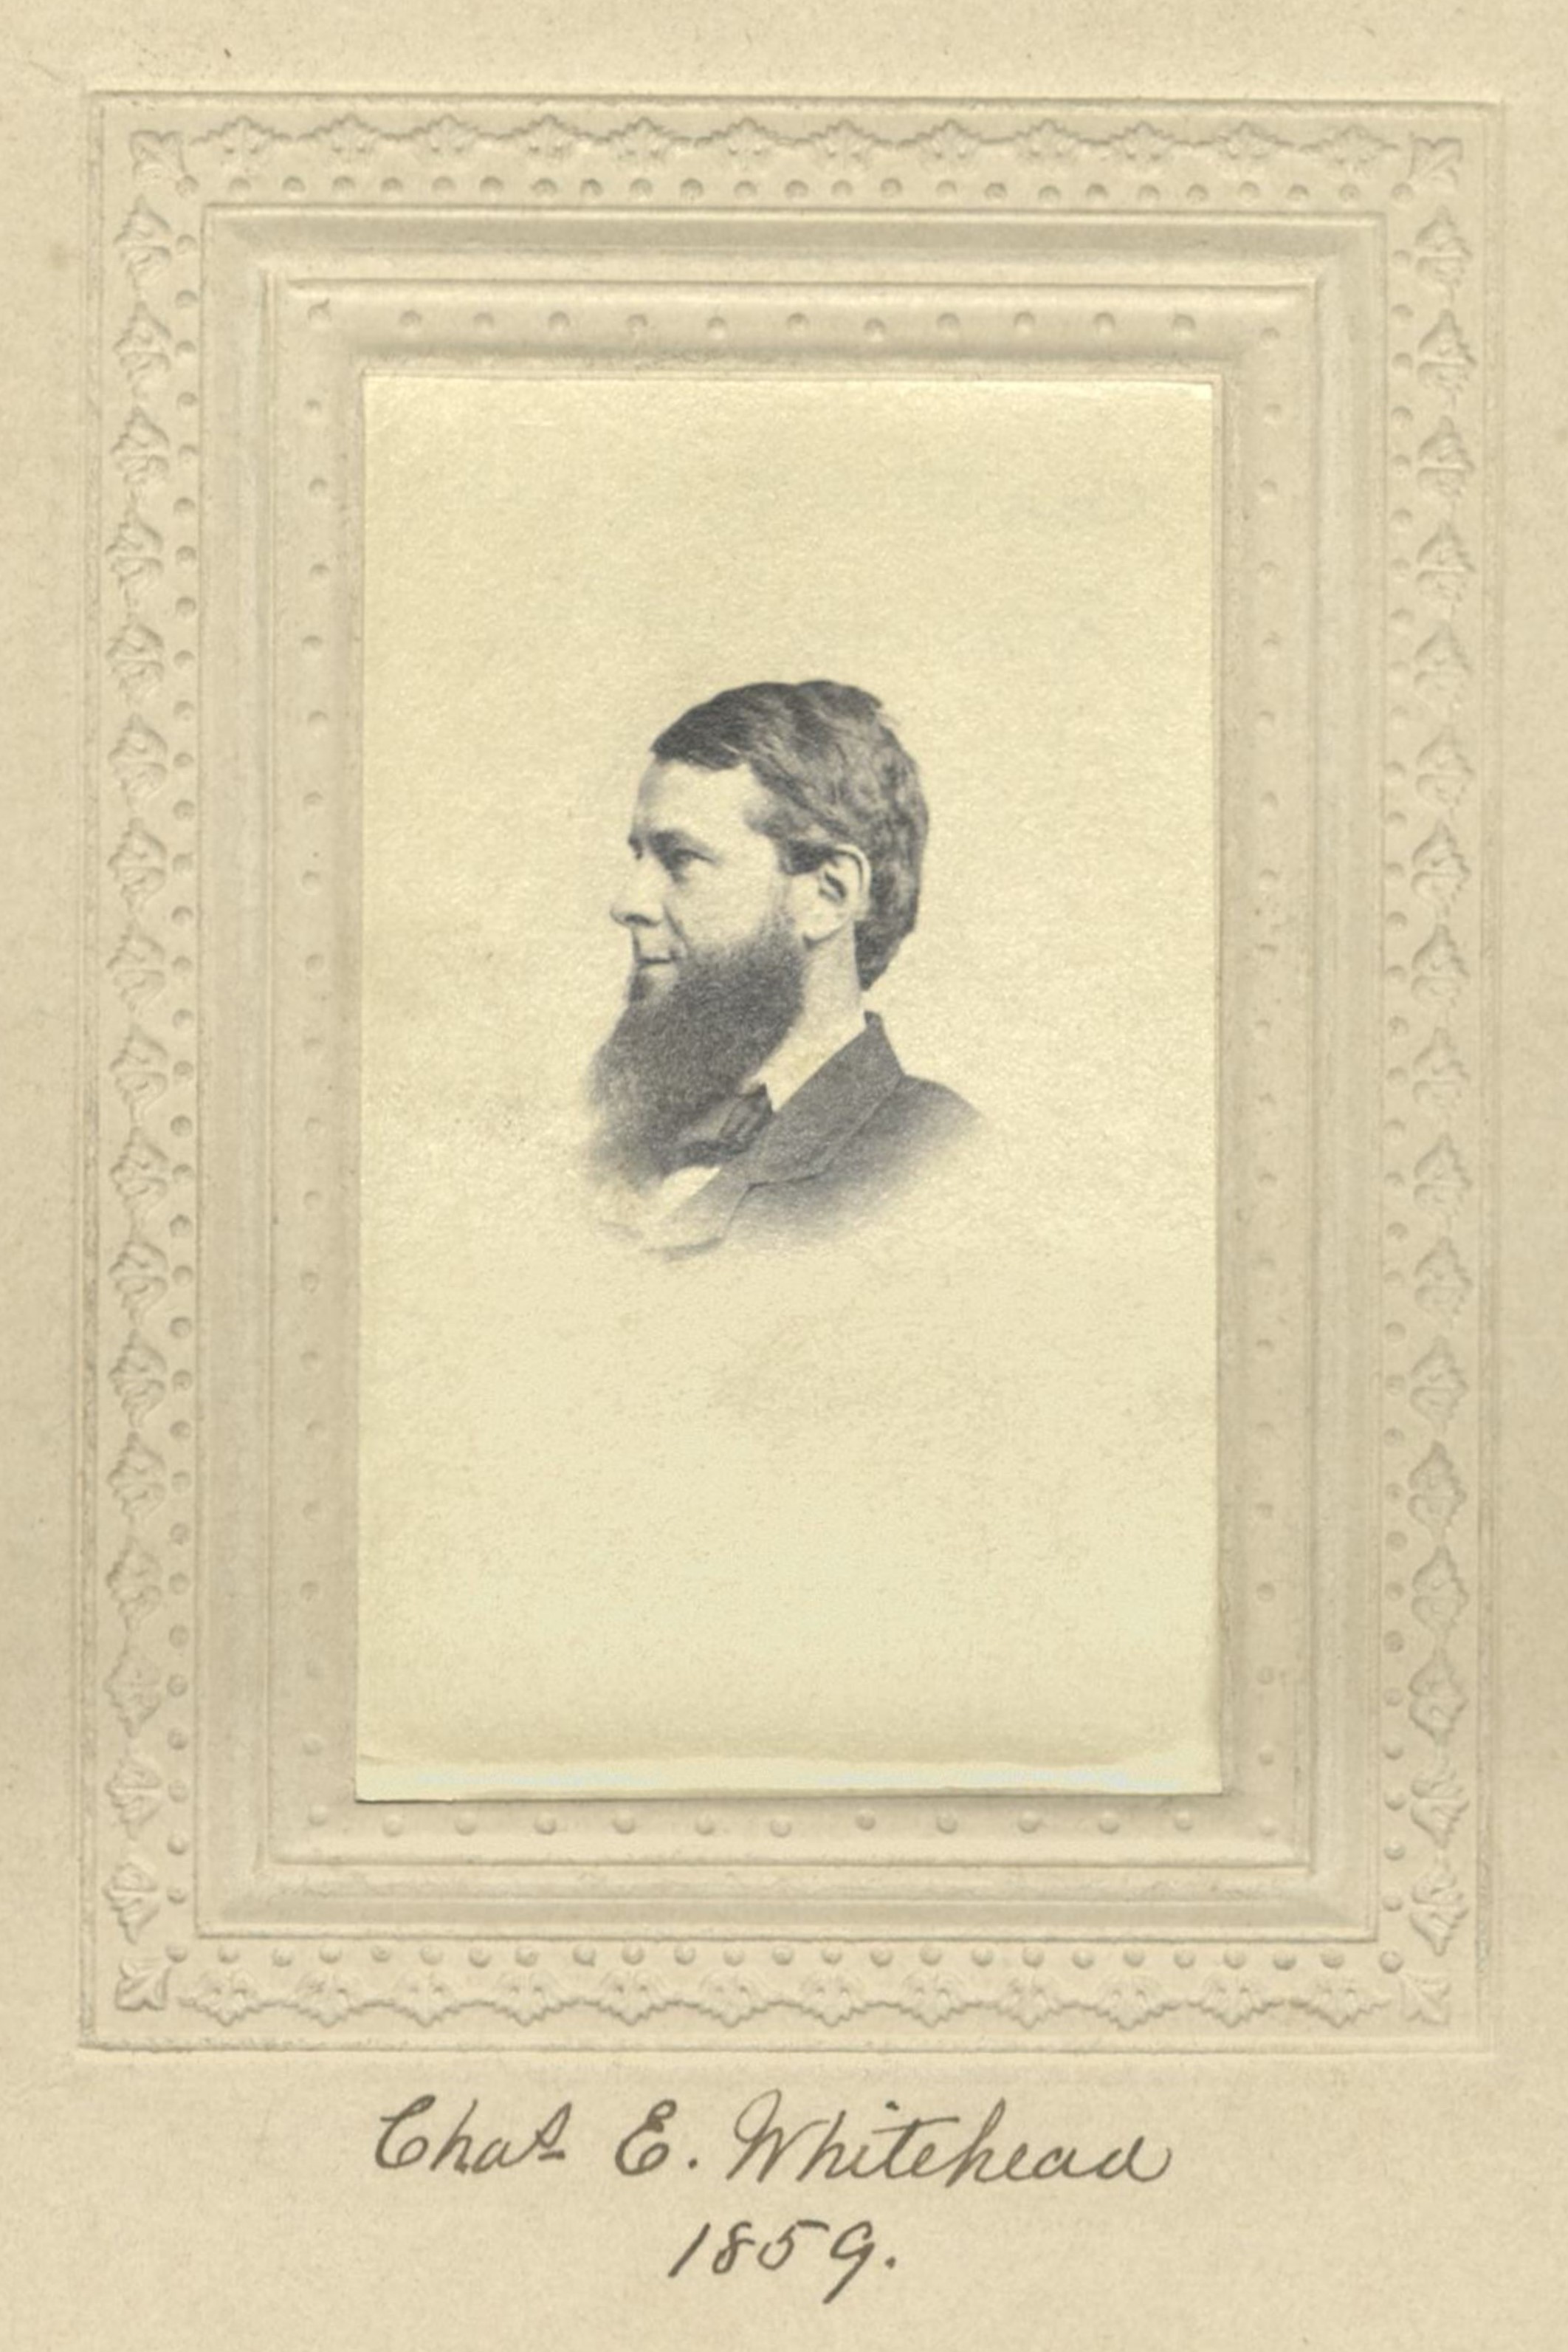 Member portrait of Charles E. Whitehead